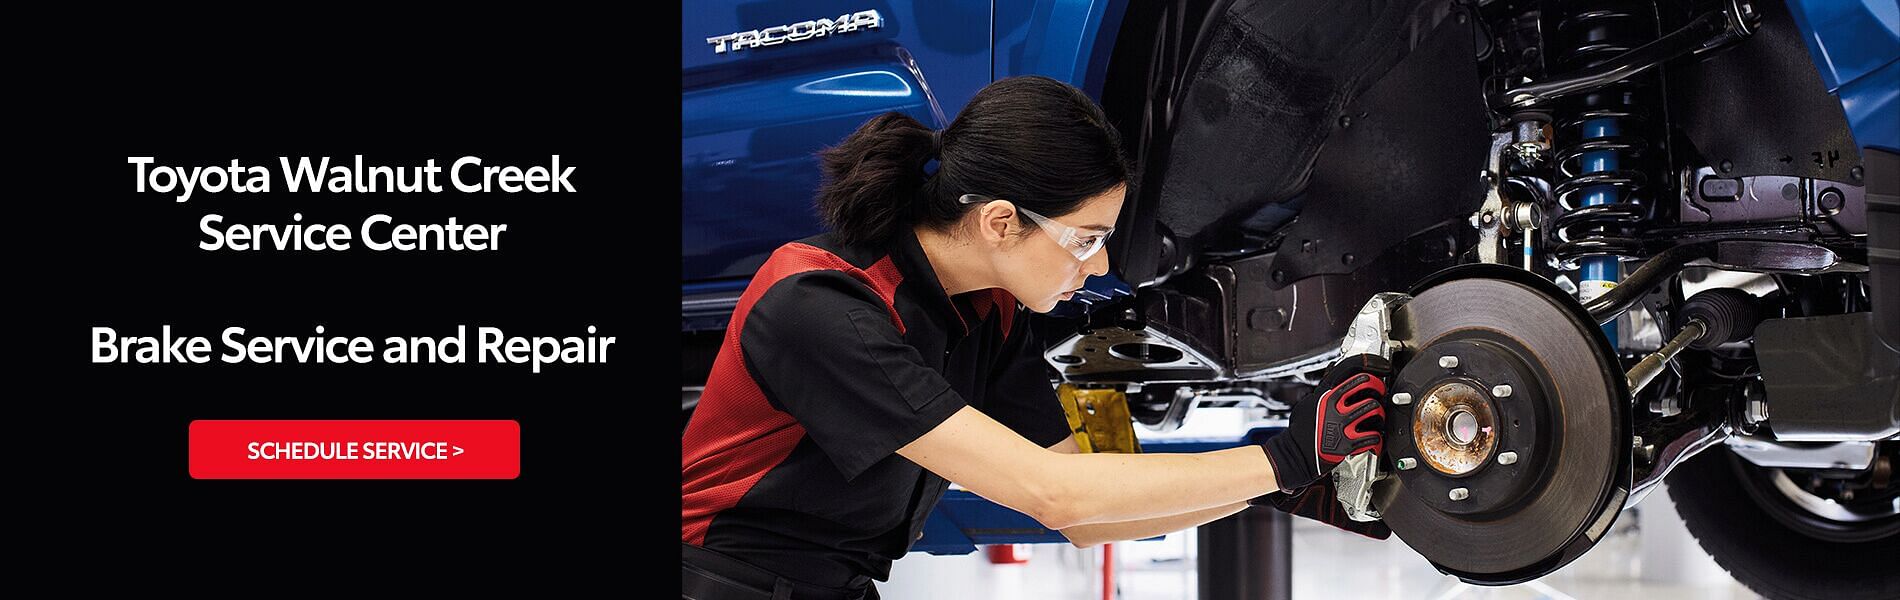 Toyota Walnut Creek Service Center Brake Service and Repair - a woman checking brakes